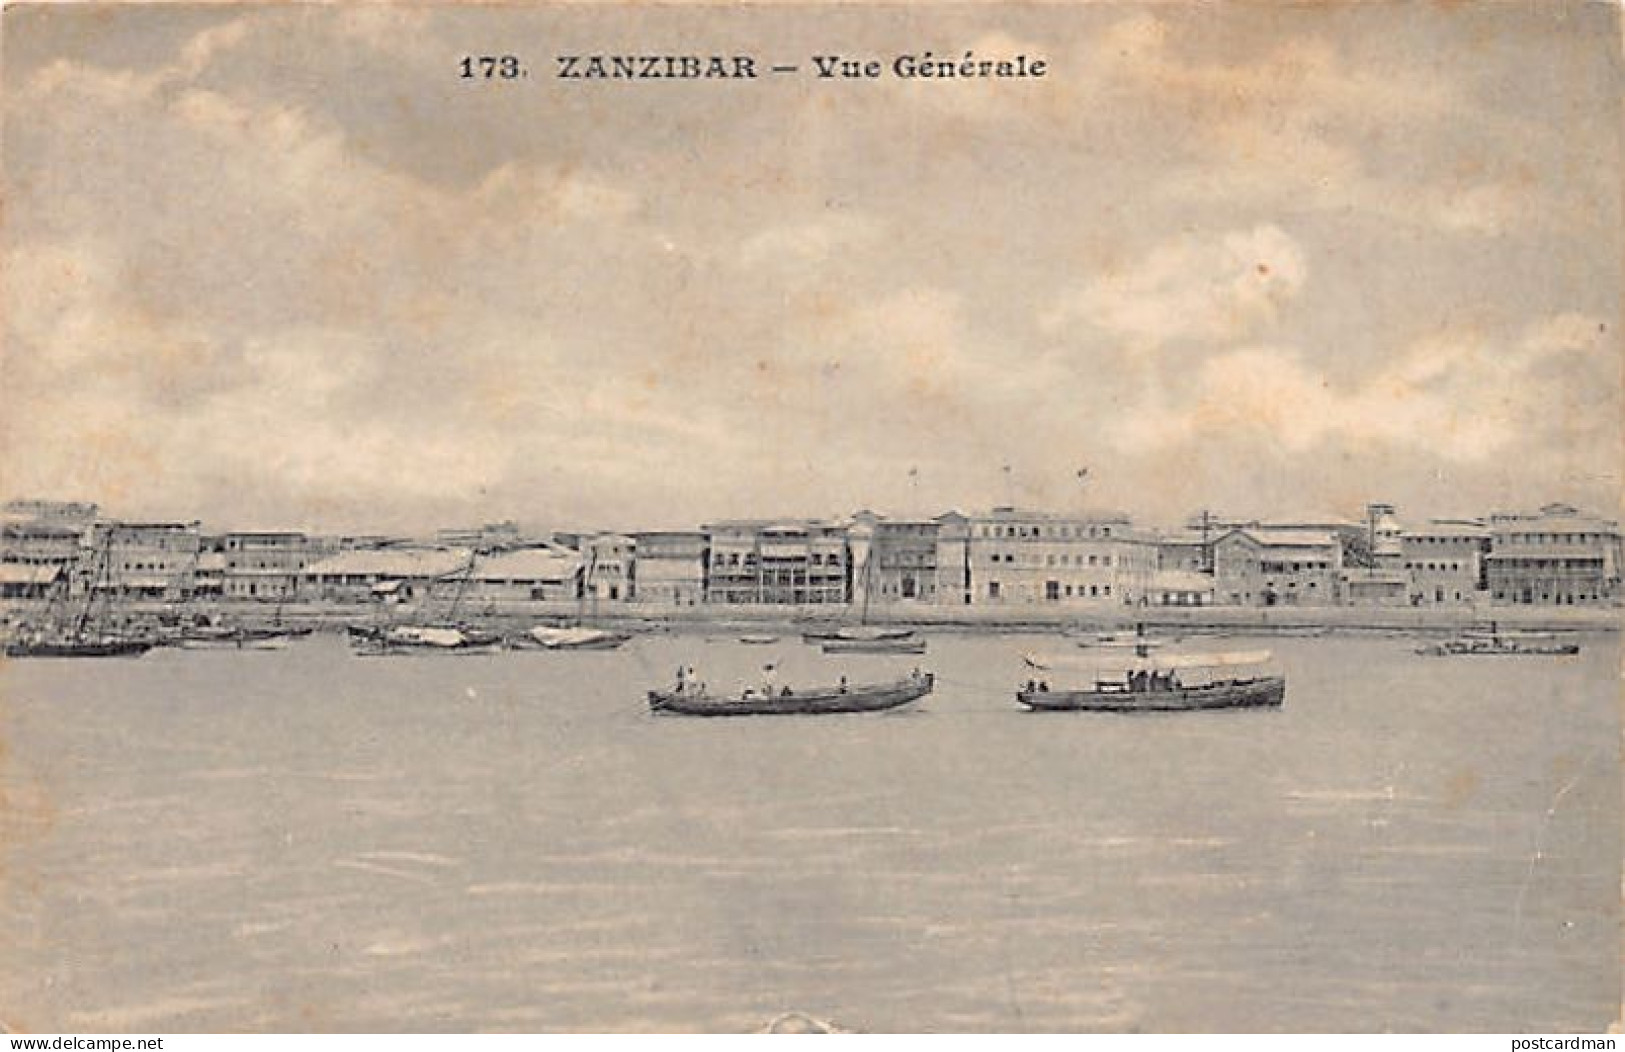 Tanzania - ZANZIBAR - General View From The Sea - Publ. Messageries Maritimes 173 - Tanzania